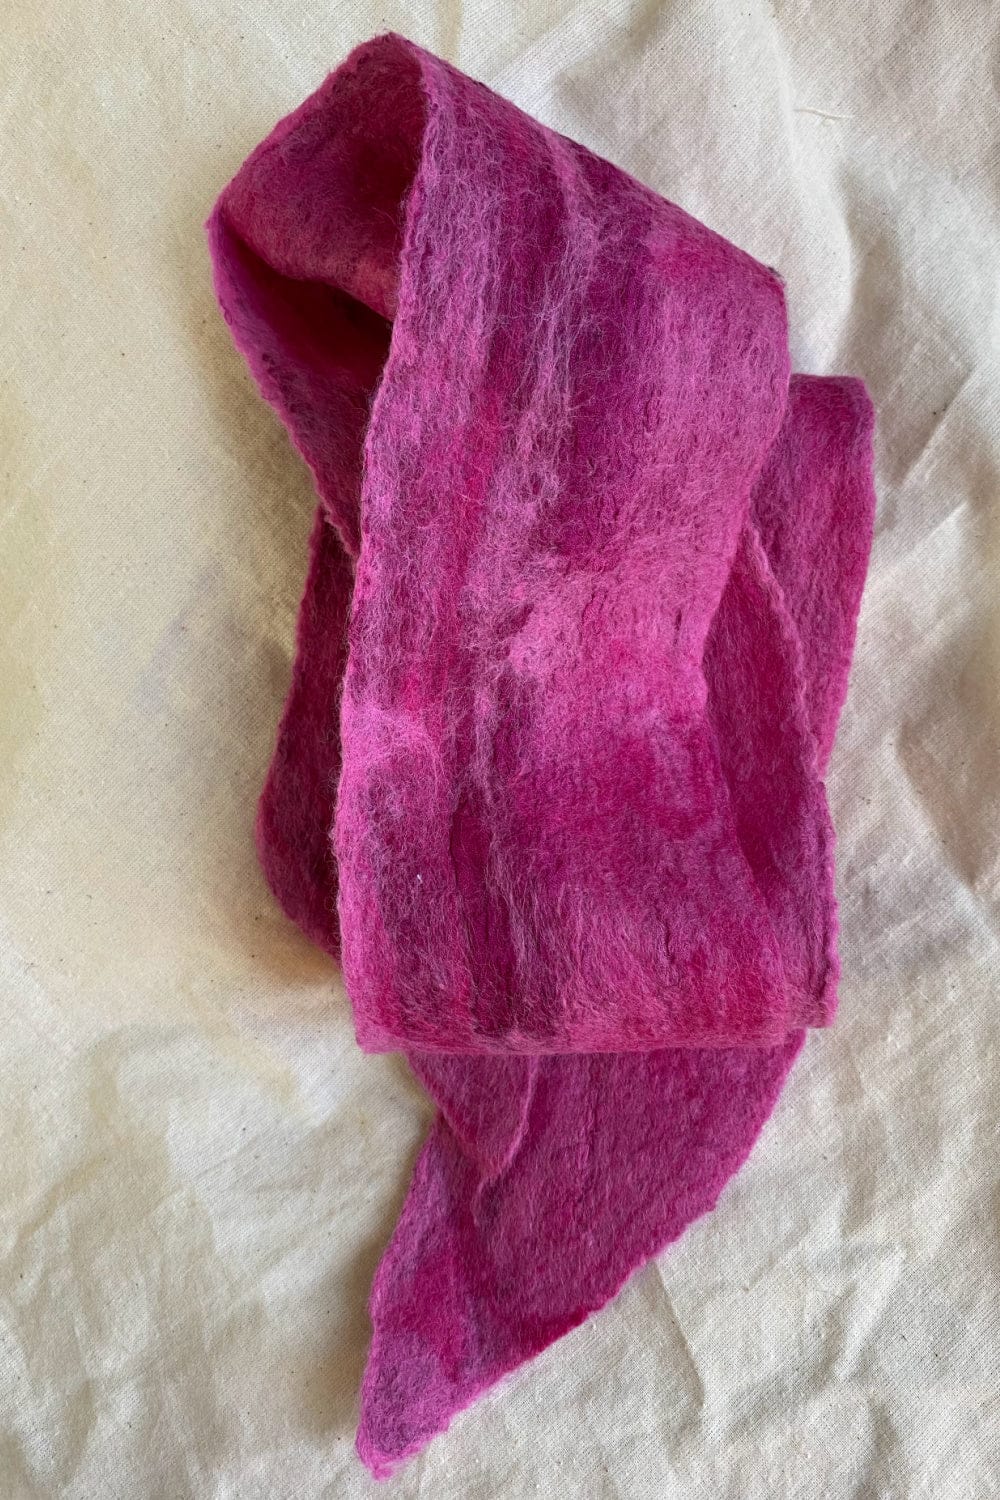 Sari head scarf in a blend of pink felt and vintage silks.